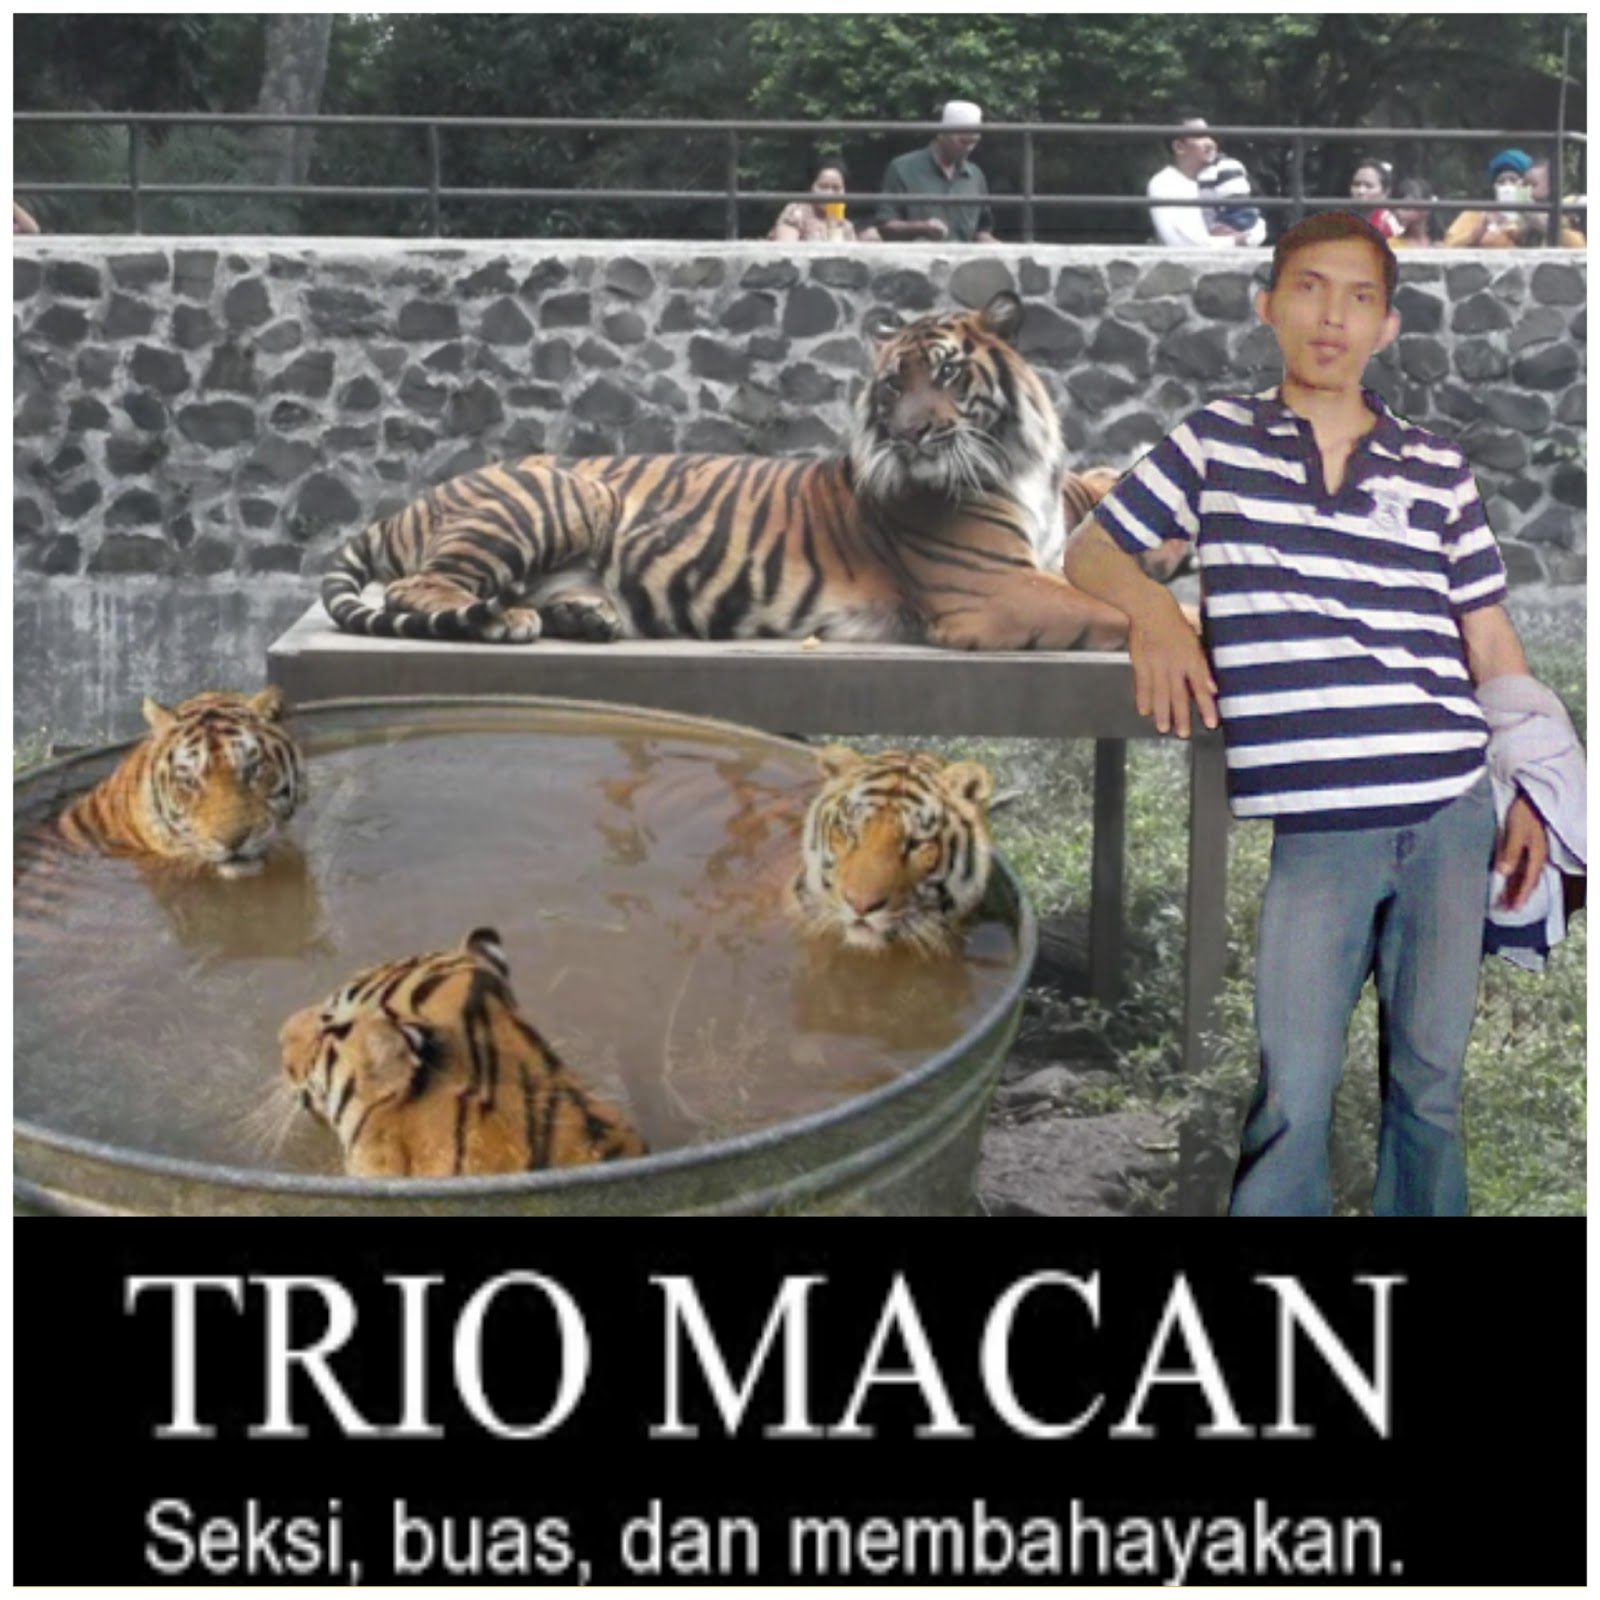 tapete kucing anggora persia bergerak,tiger,bengalischer tiger,sibirischer tiger,tierwelt,felidae